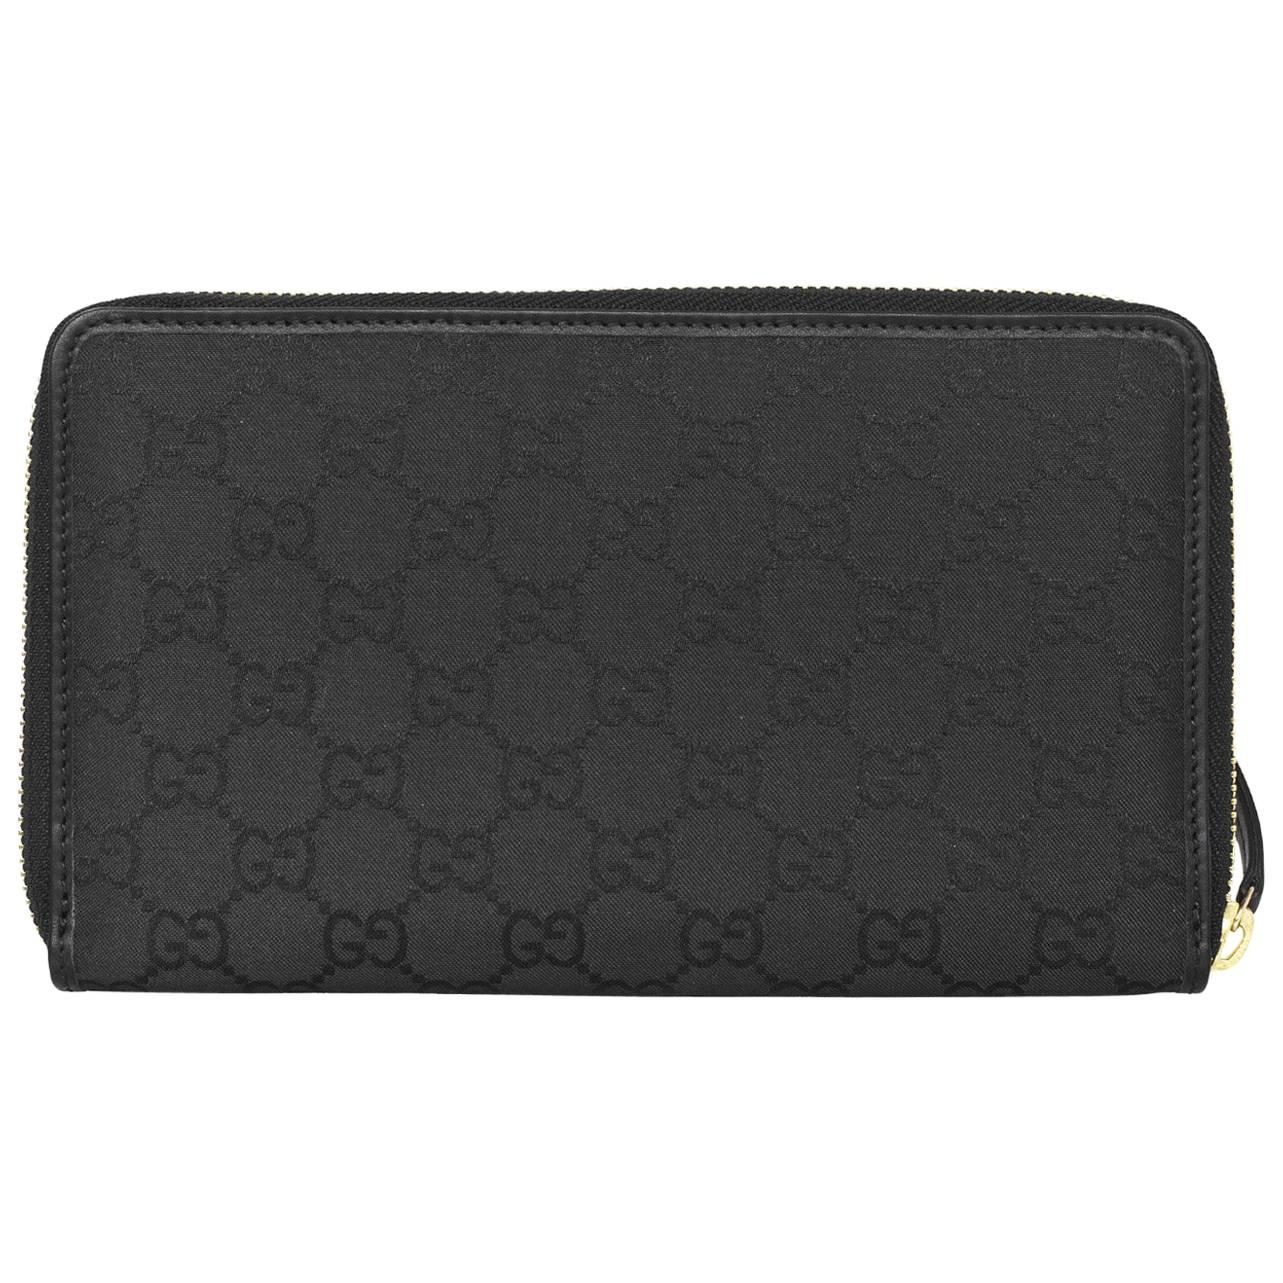 Gucci Monogram GG Nylon Zip Around Wallet with Box